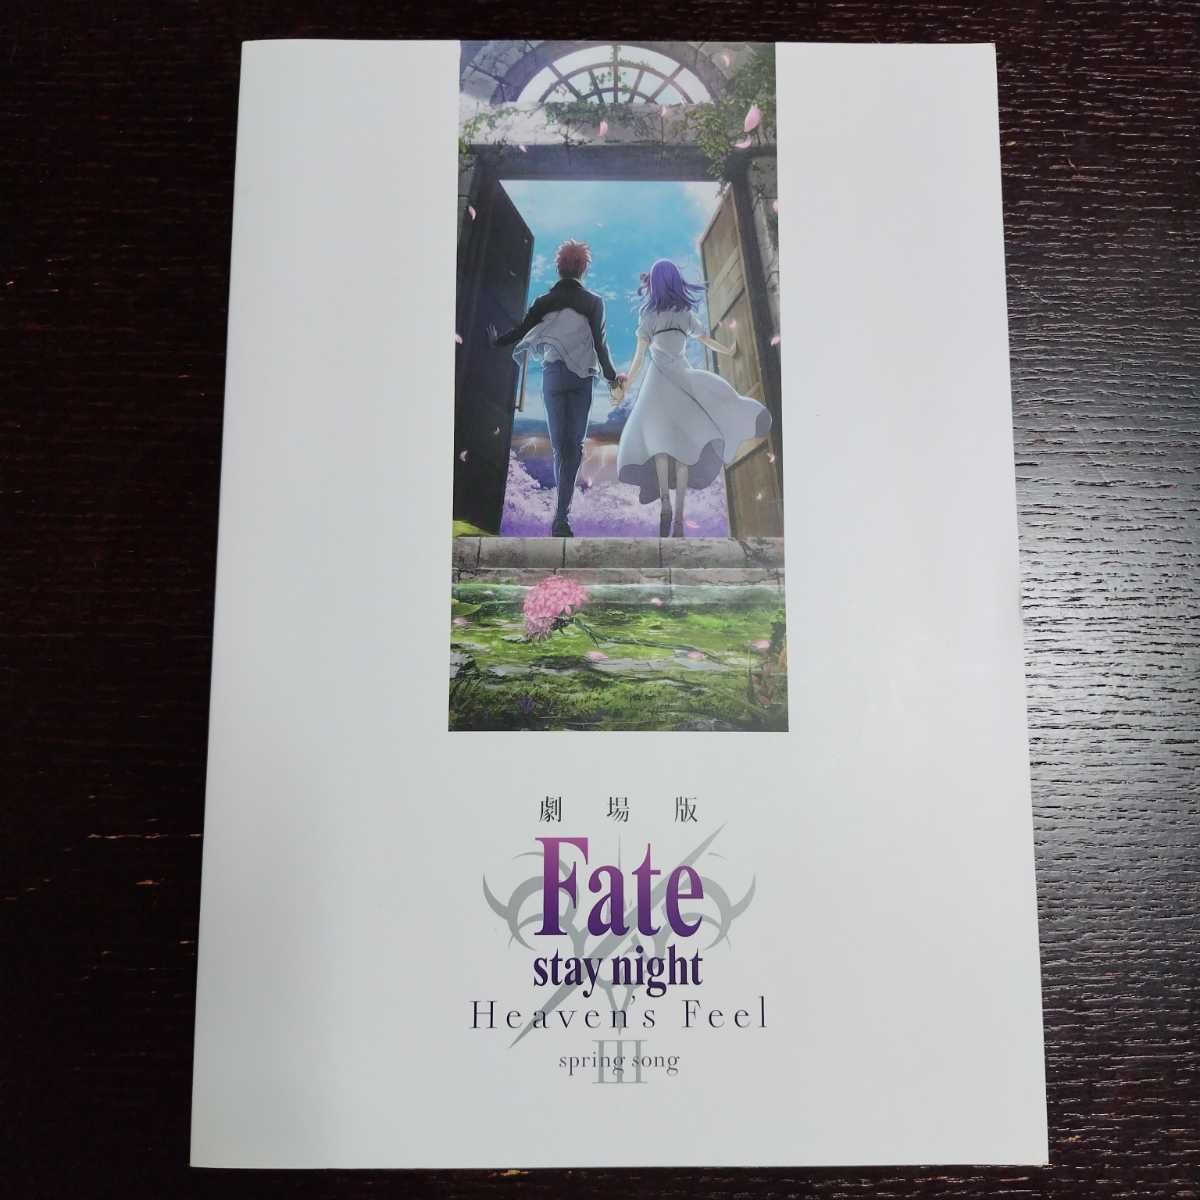 Fate stay night комплект /Heaven\'s Feel проспект TYPE-MOON выставка -15 год. траектория - брошюра .